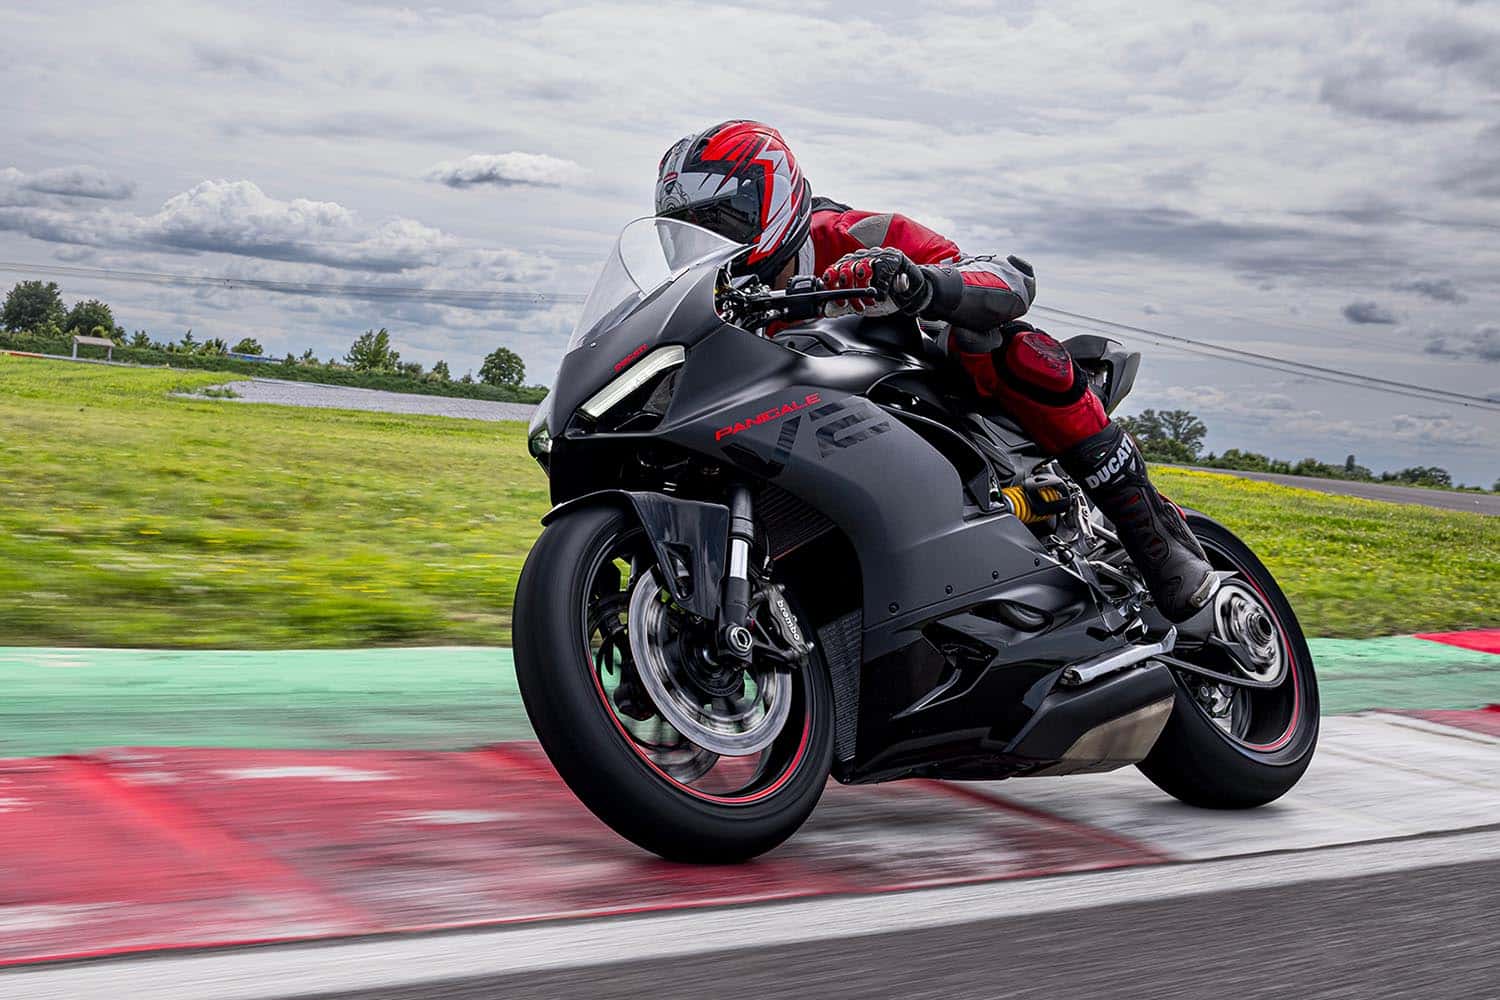 La Ducati Panigale V2 entrega 155 CV de potencia